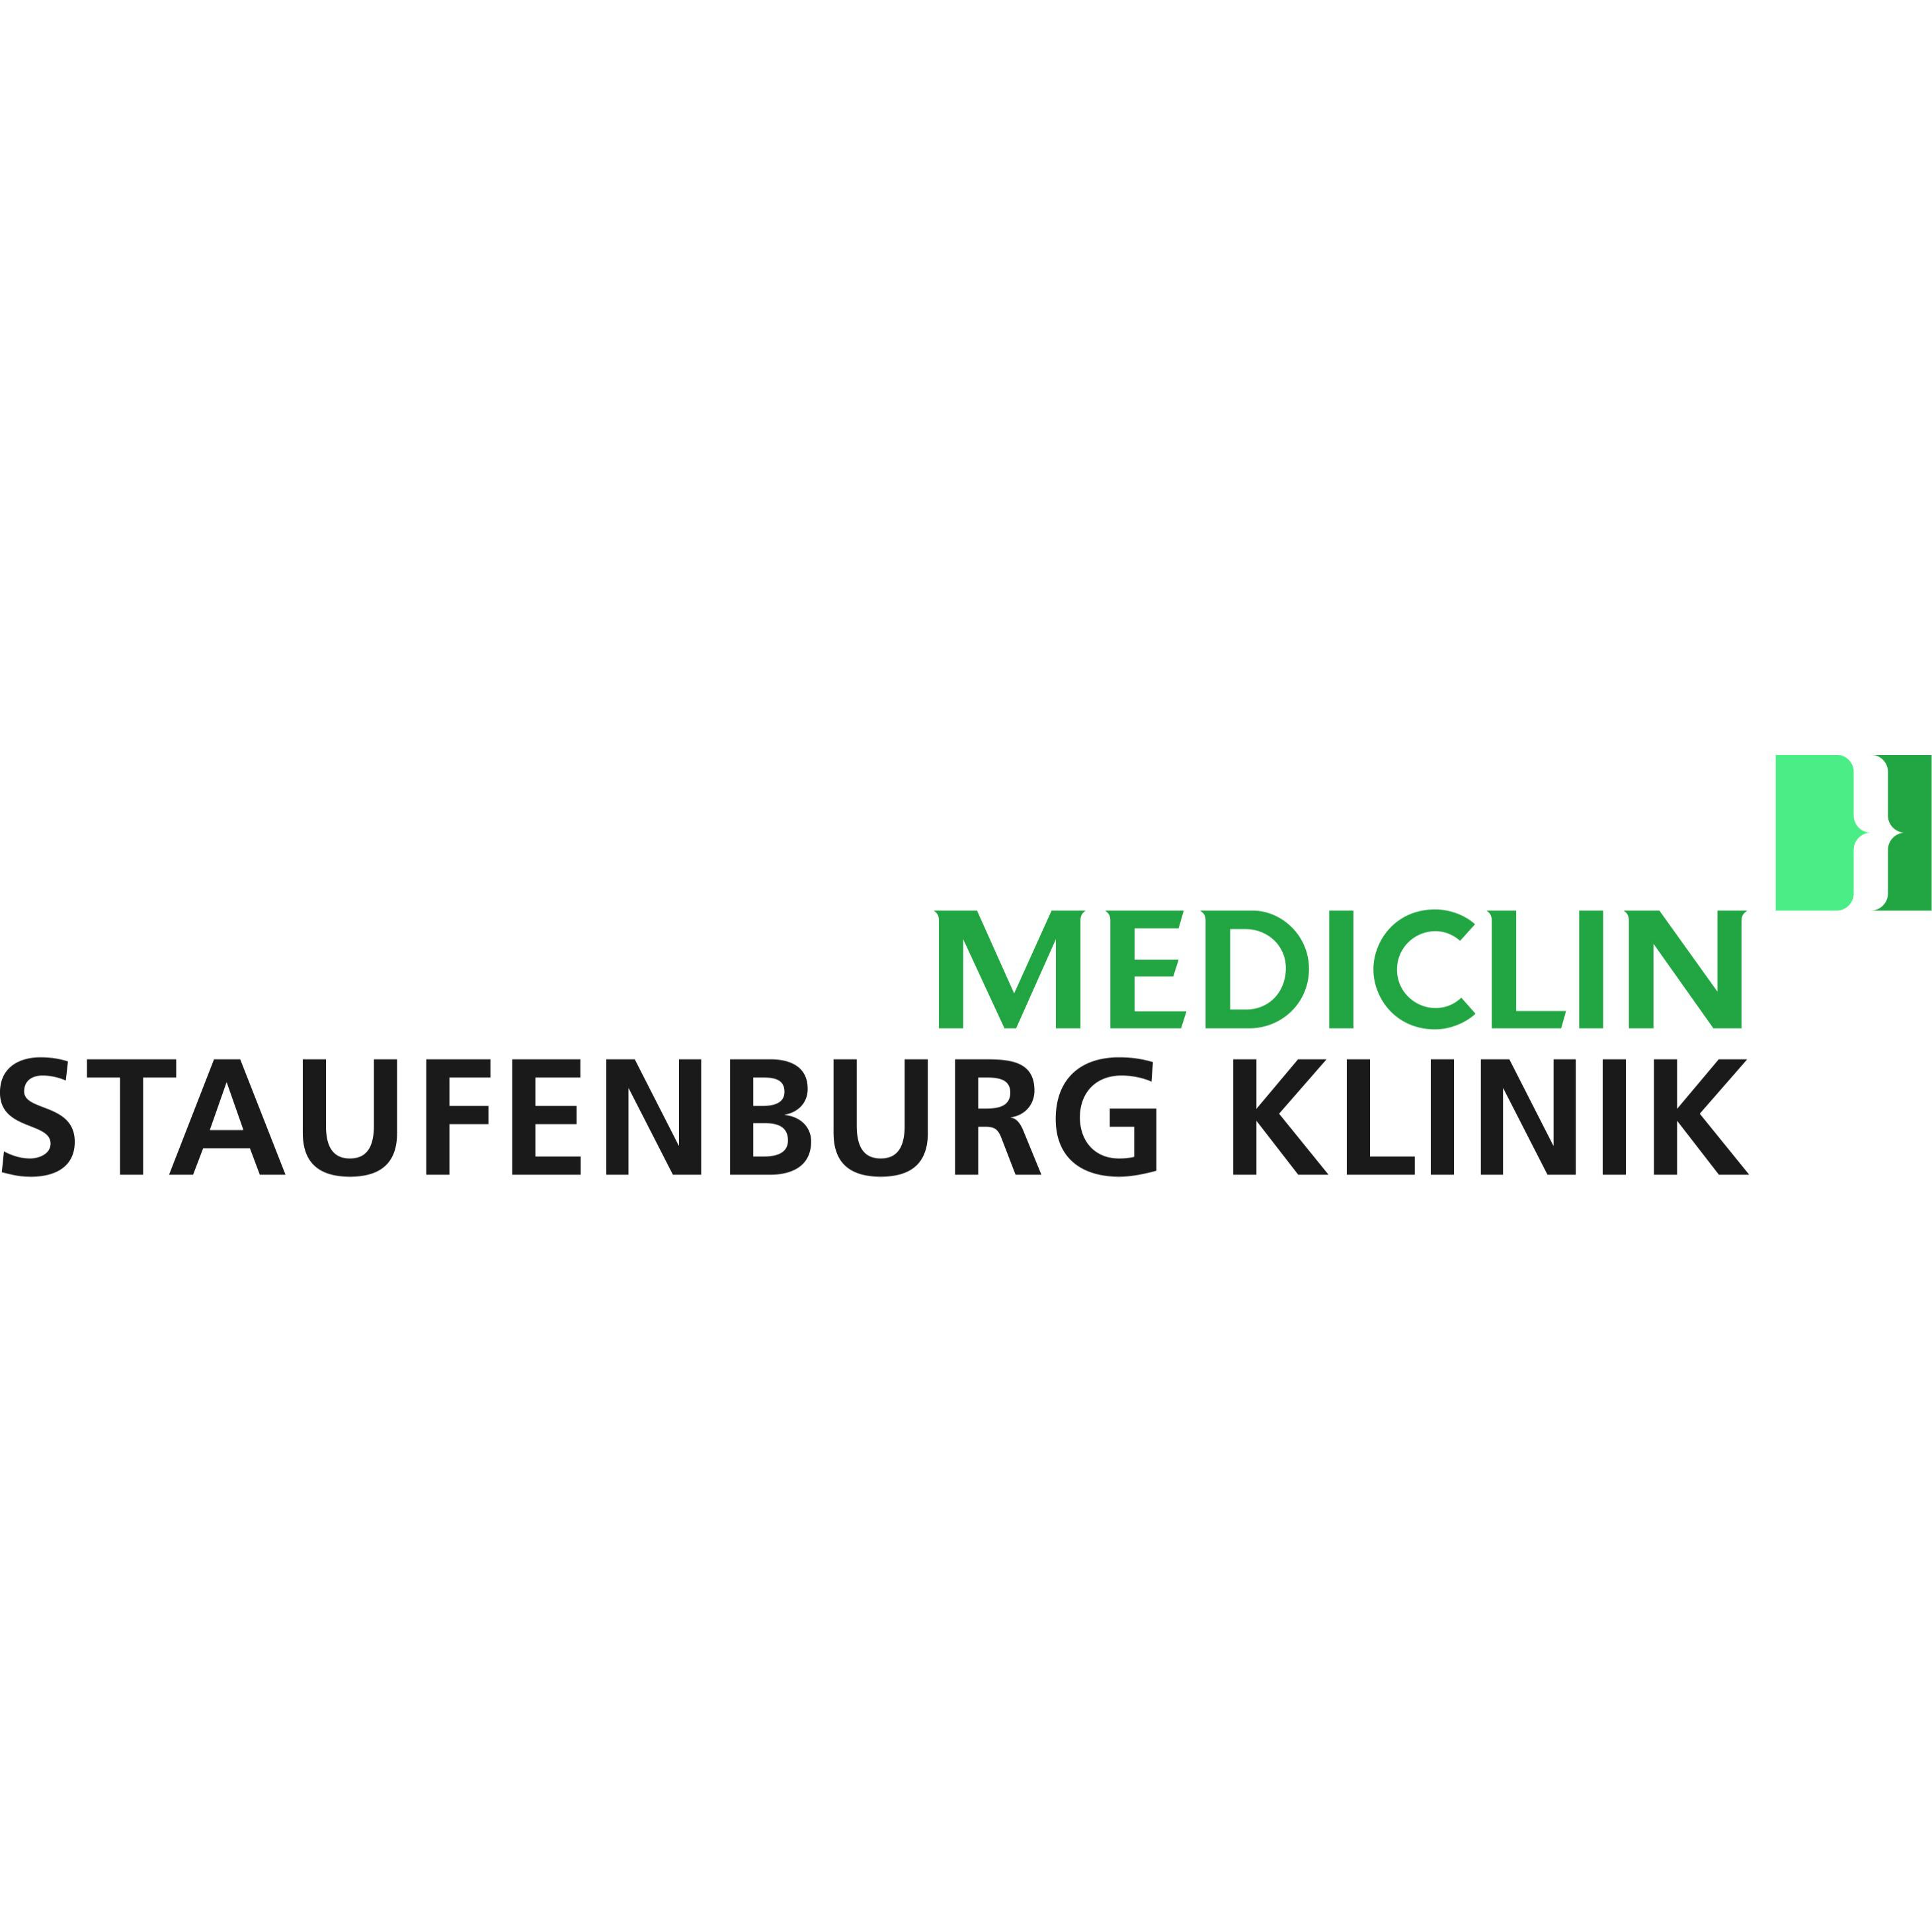 MEDICLIN Staufenburg Klinik in Durbach - Logo